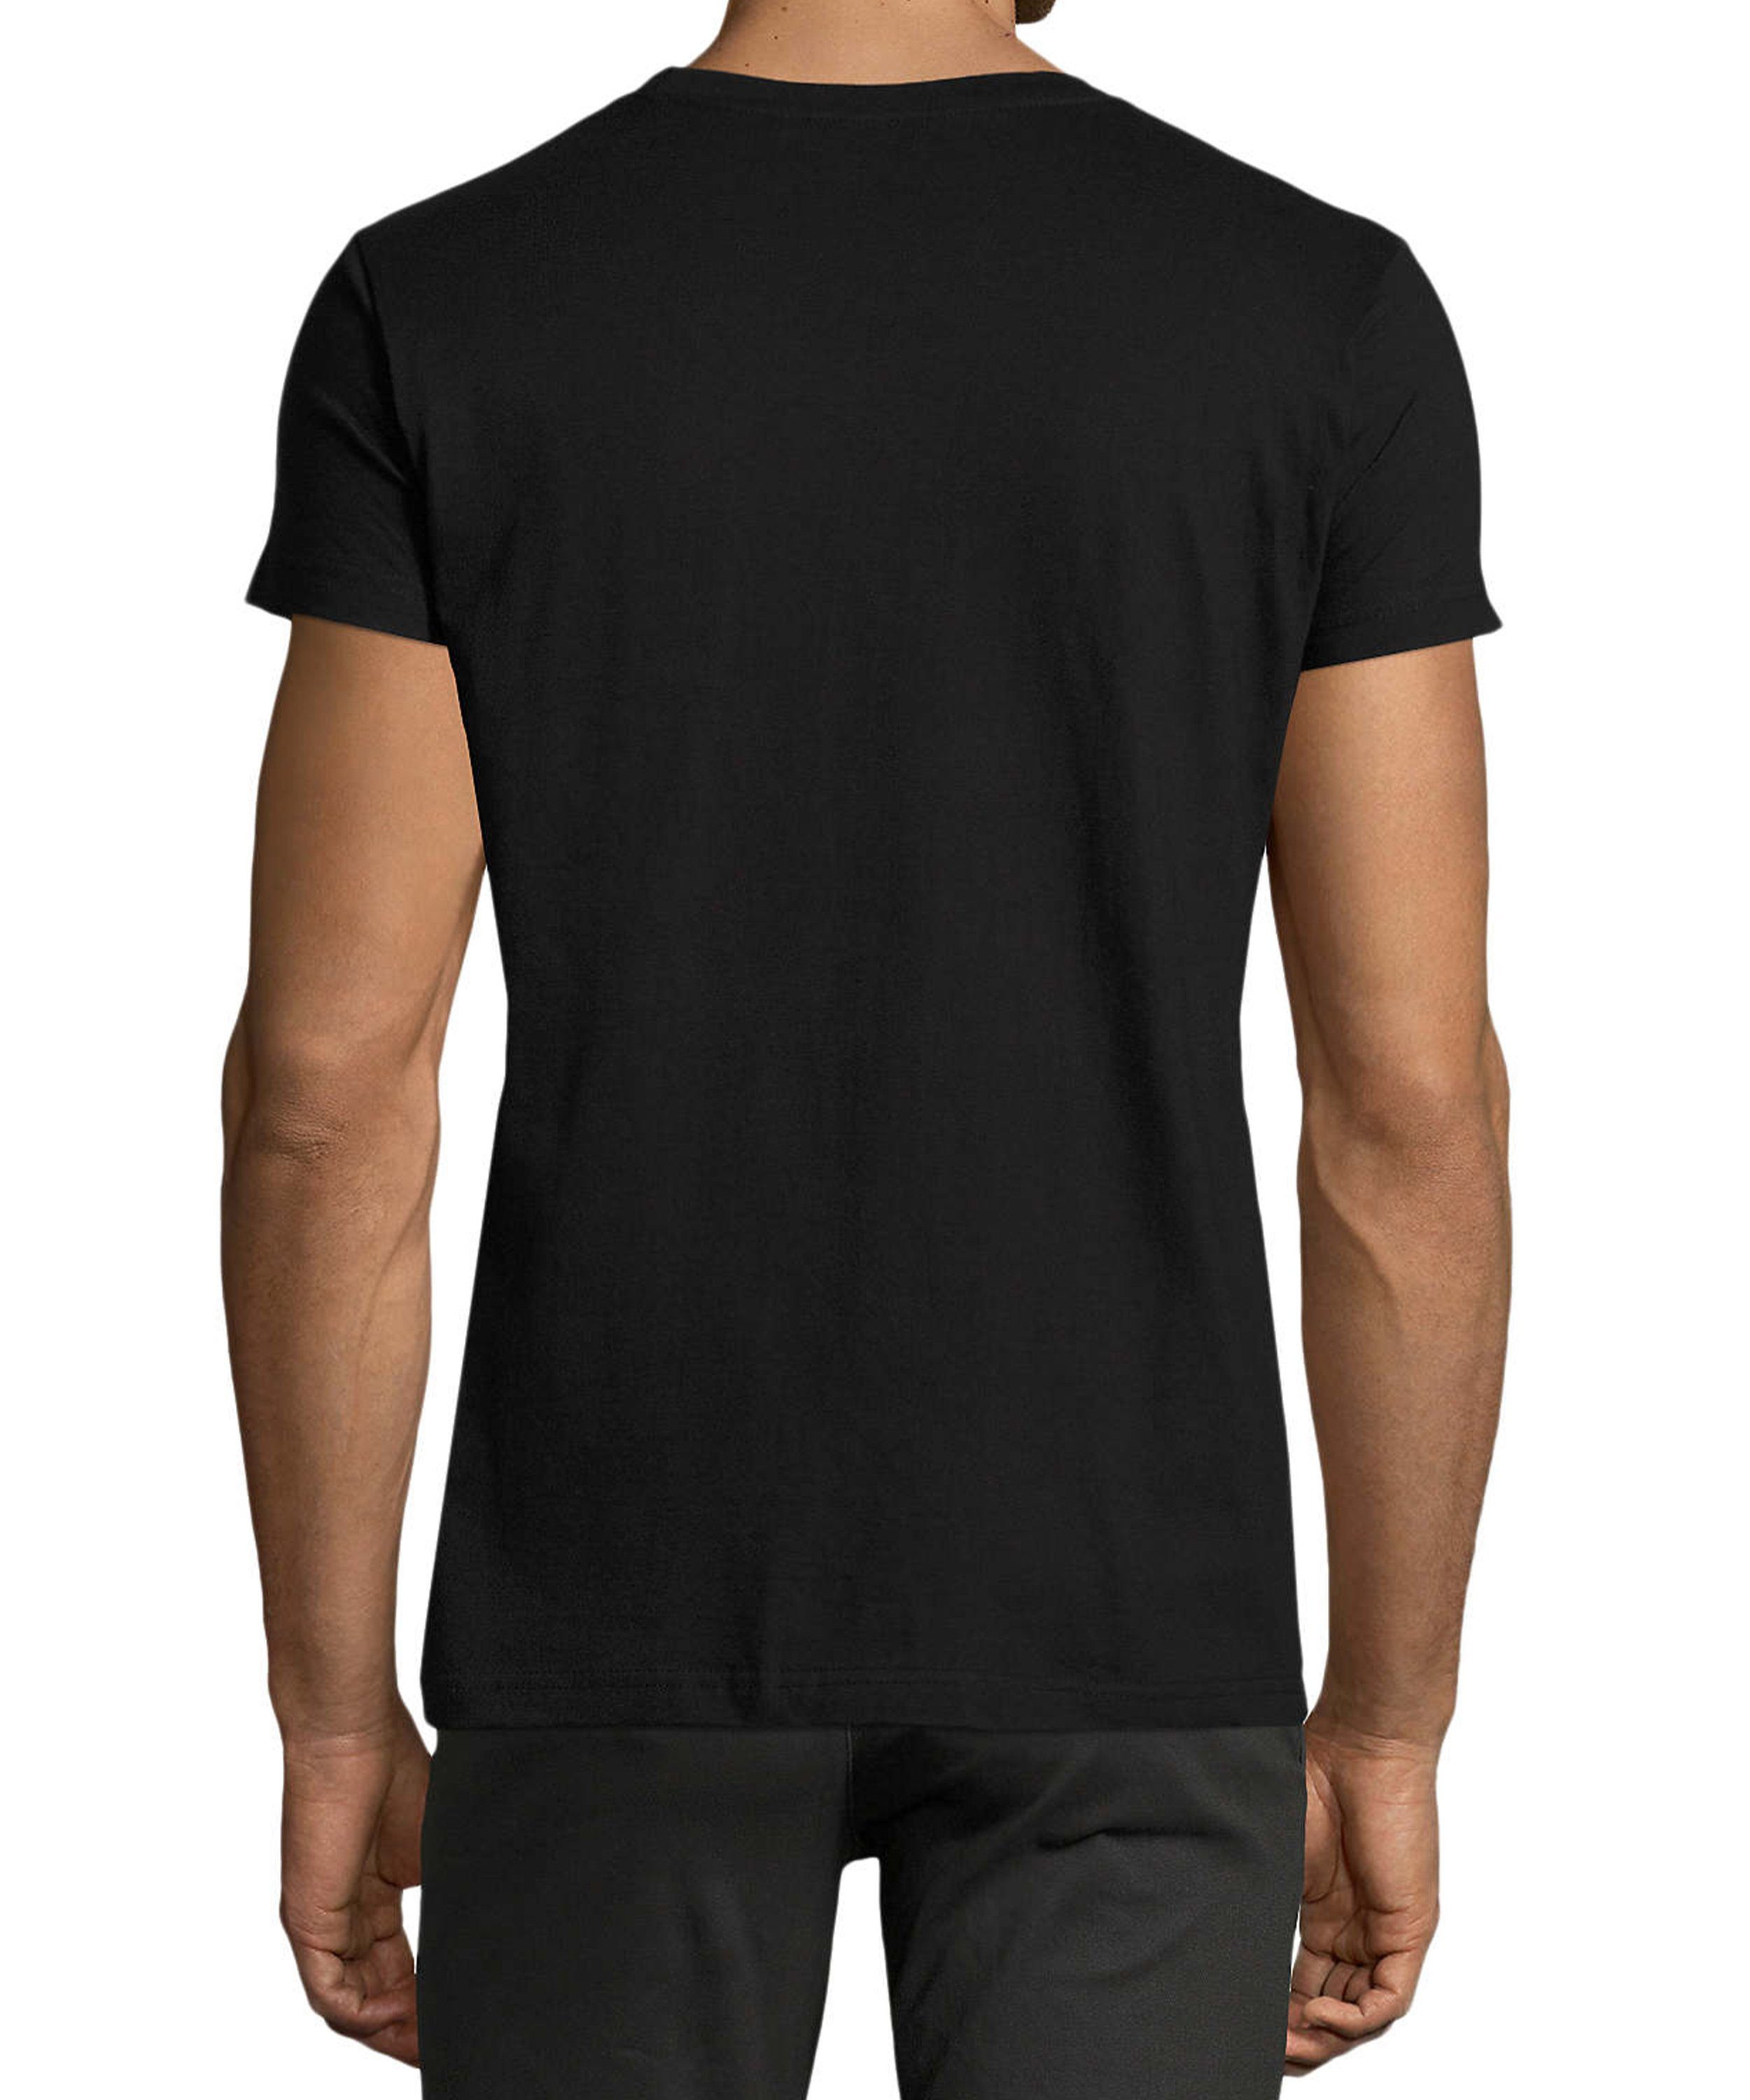 MyDesign24 T-Shirt Herren BBQ Print Shirt Every Retro Aufdruck - Day schwarz is i300 T-Shirt mit Day a Regular Grill Fit, Baumwollshirt Grill